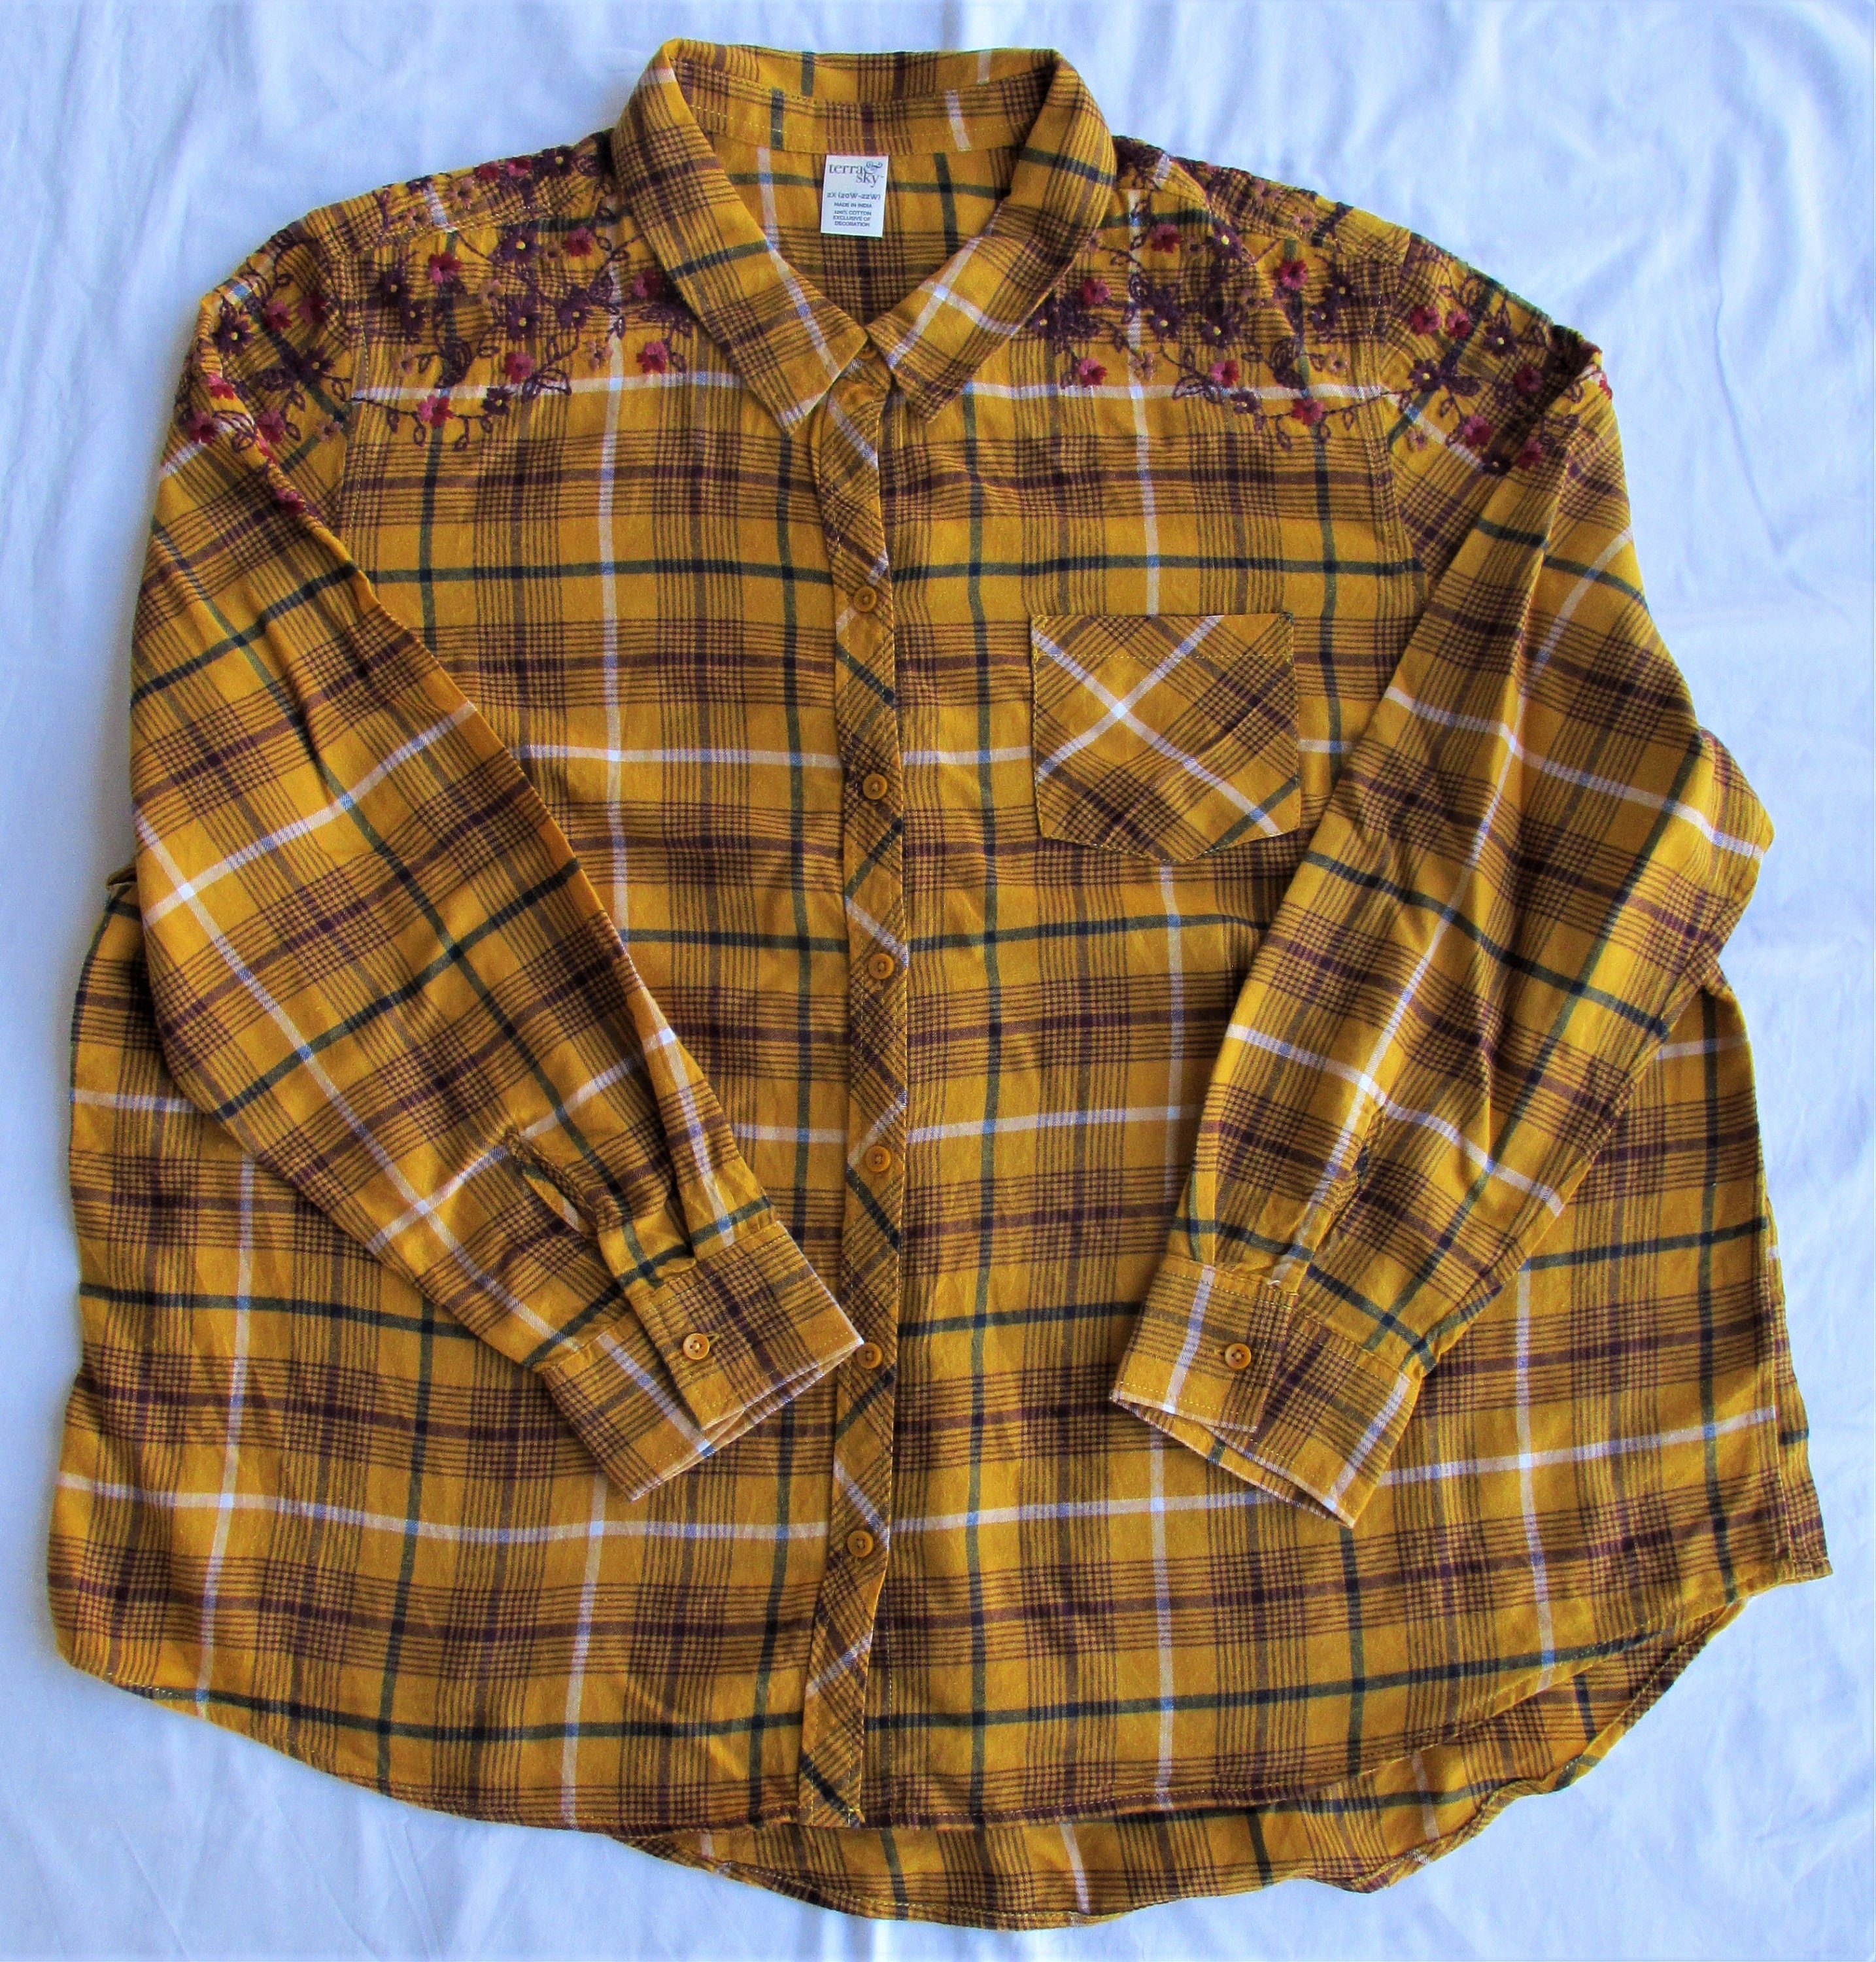 Terra & Sky Women's Embroidered L/S Cotton Shirt Size 2X 20W-22W